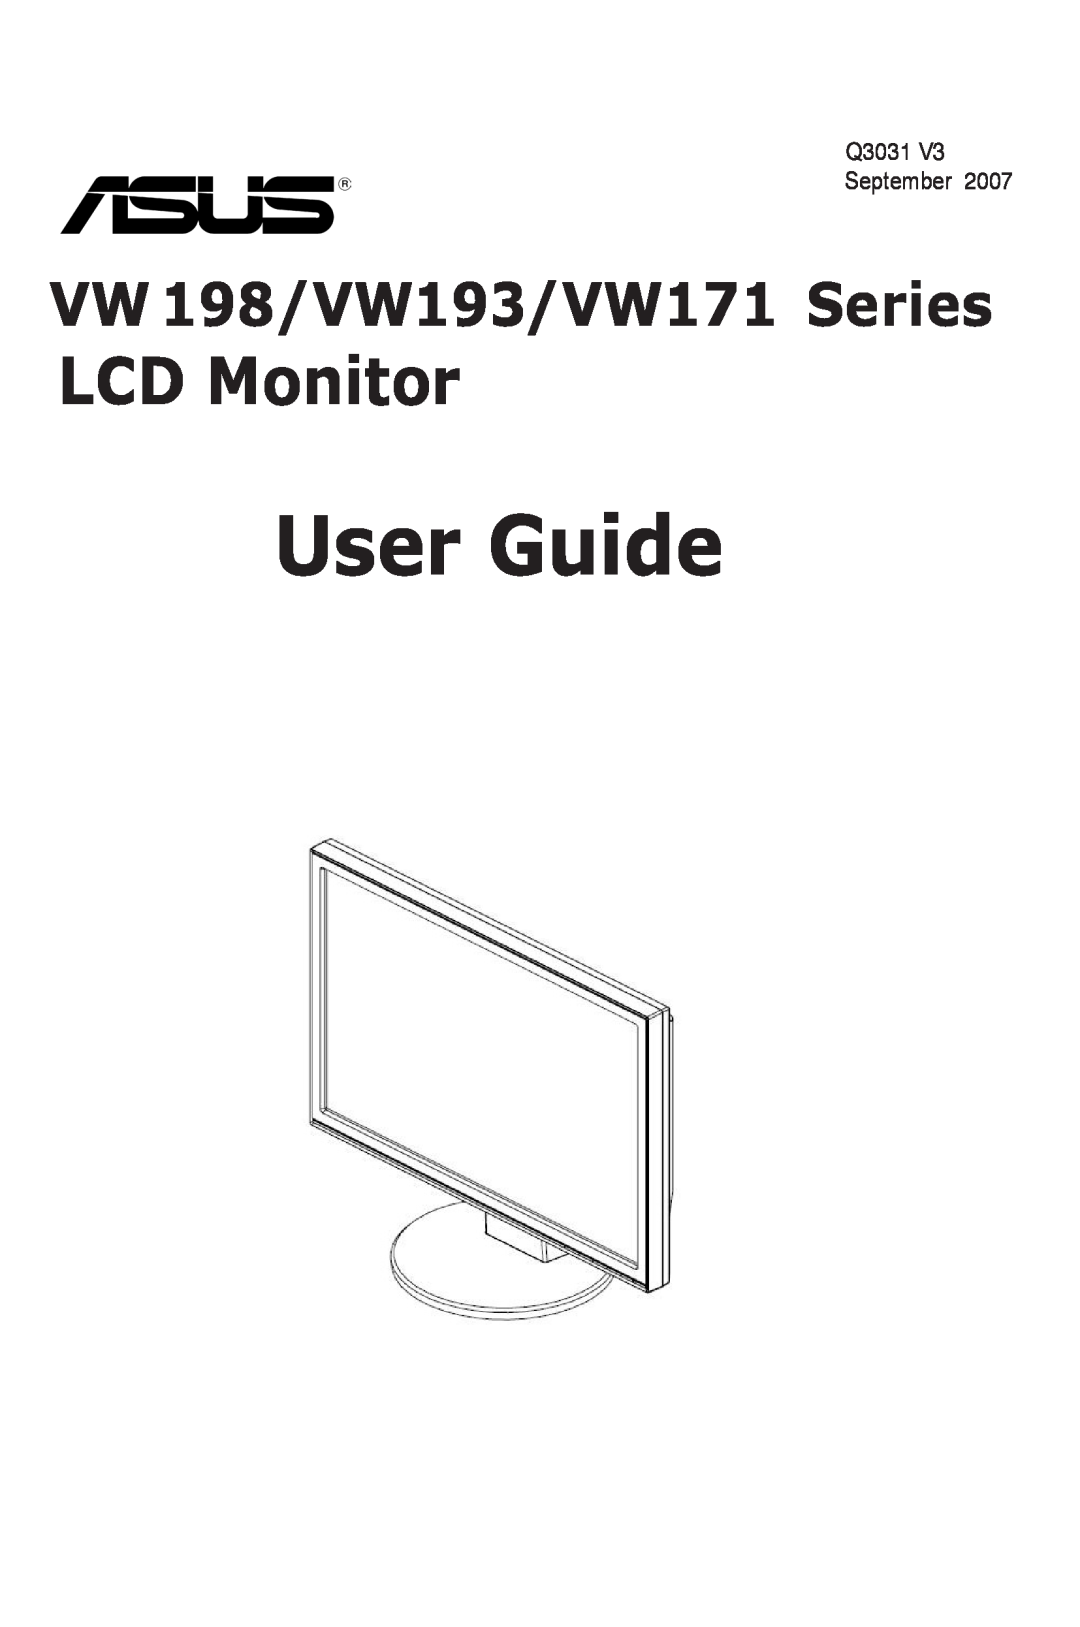 Asus VW193 Series, VW 198 Series manual September, User Guide, LCD Monitor, VW 198/VW193/VW171 Series 